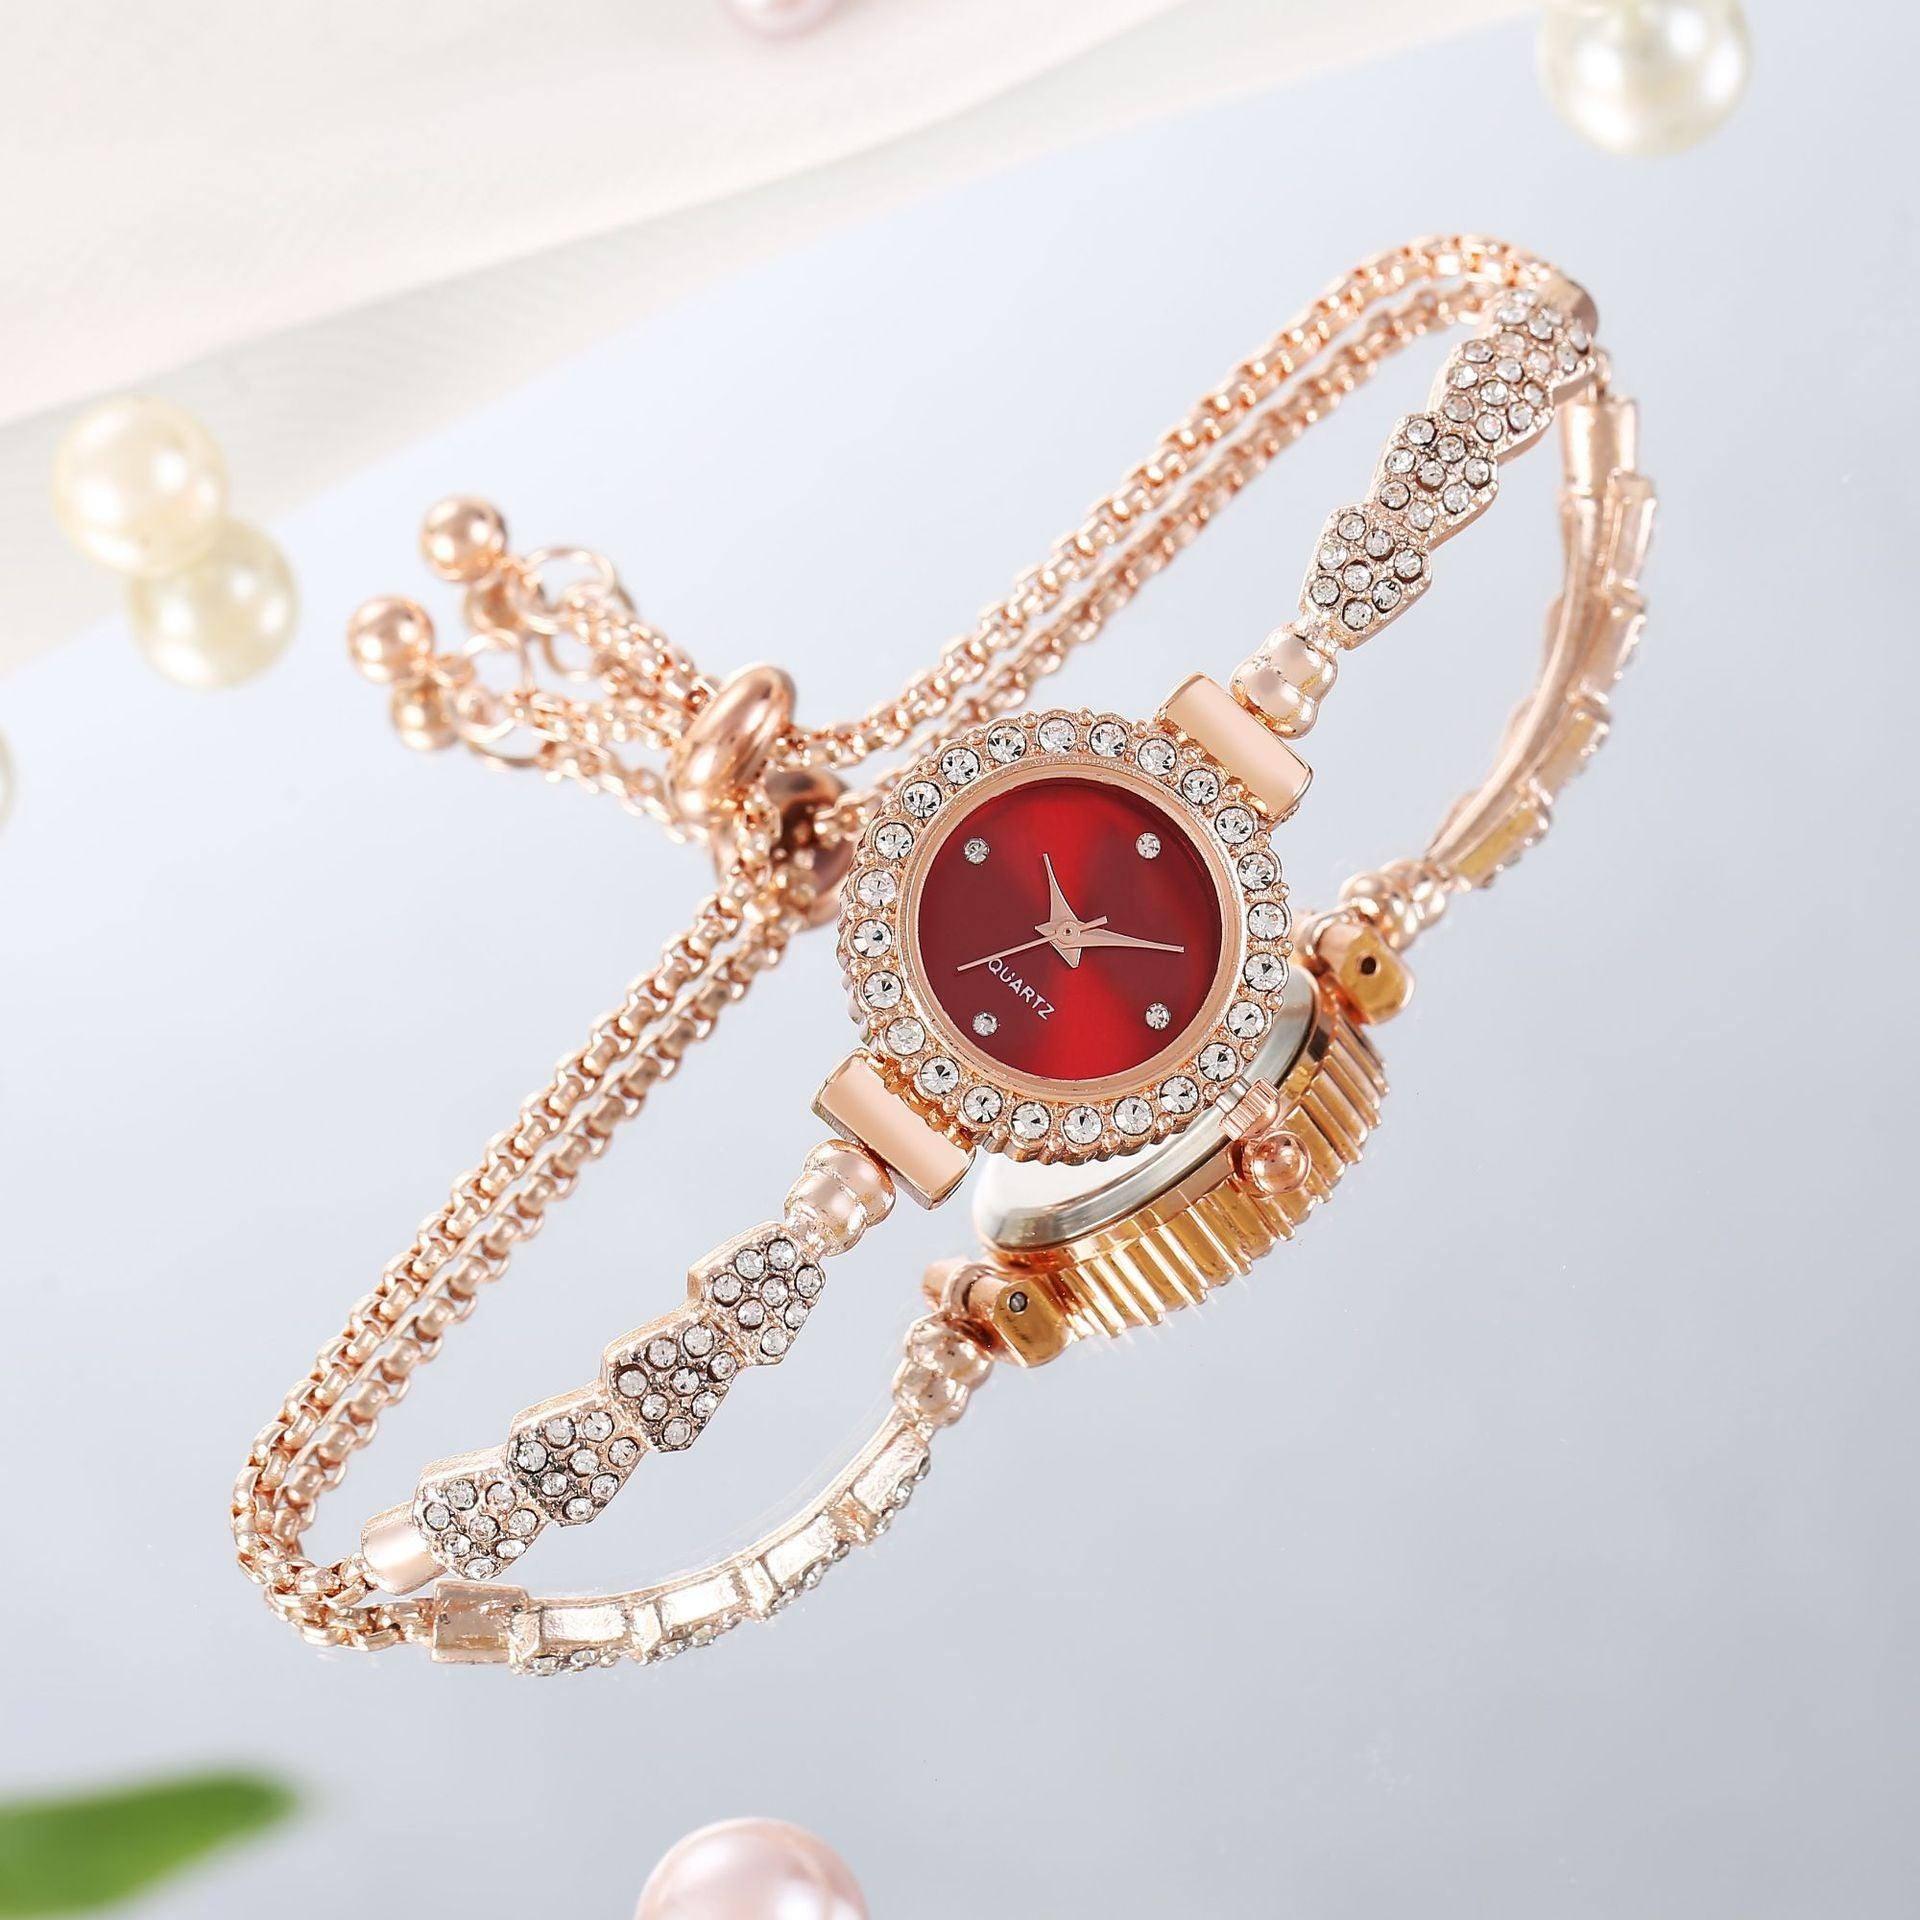 Adjustable Bracelet Watch Women's Quartz Watch-Red-3